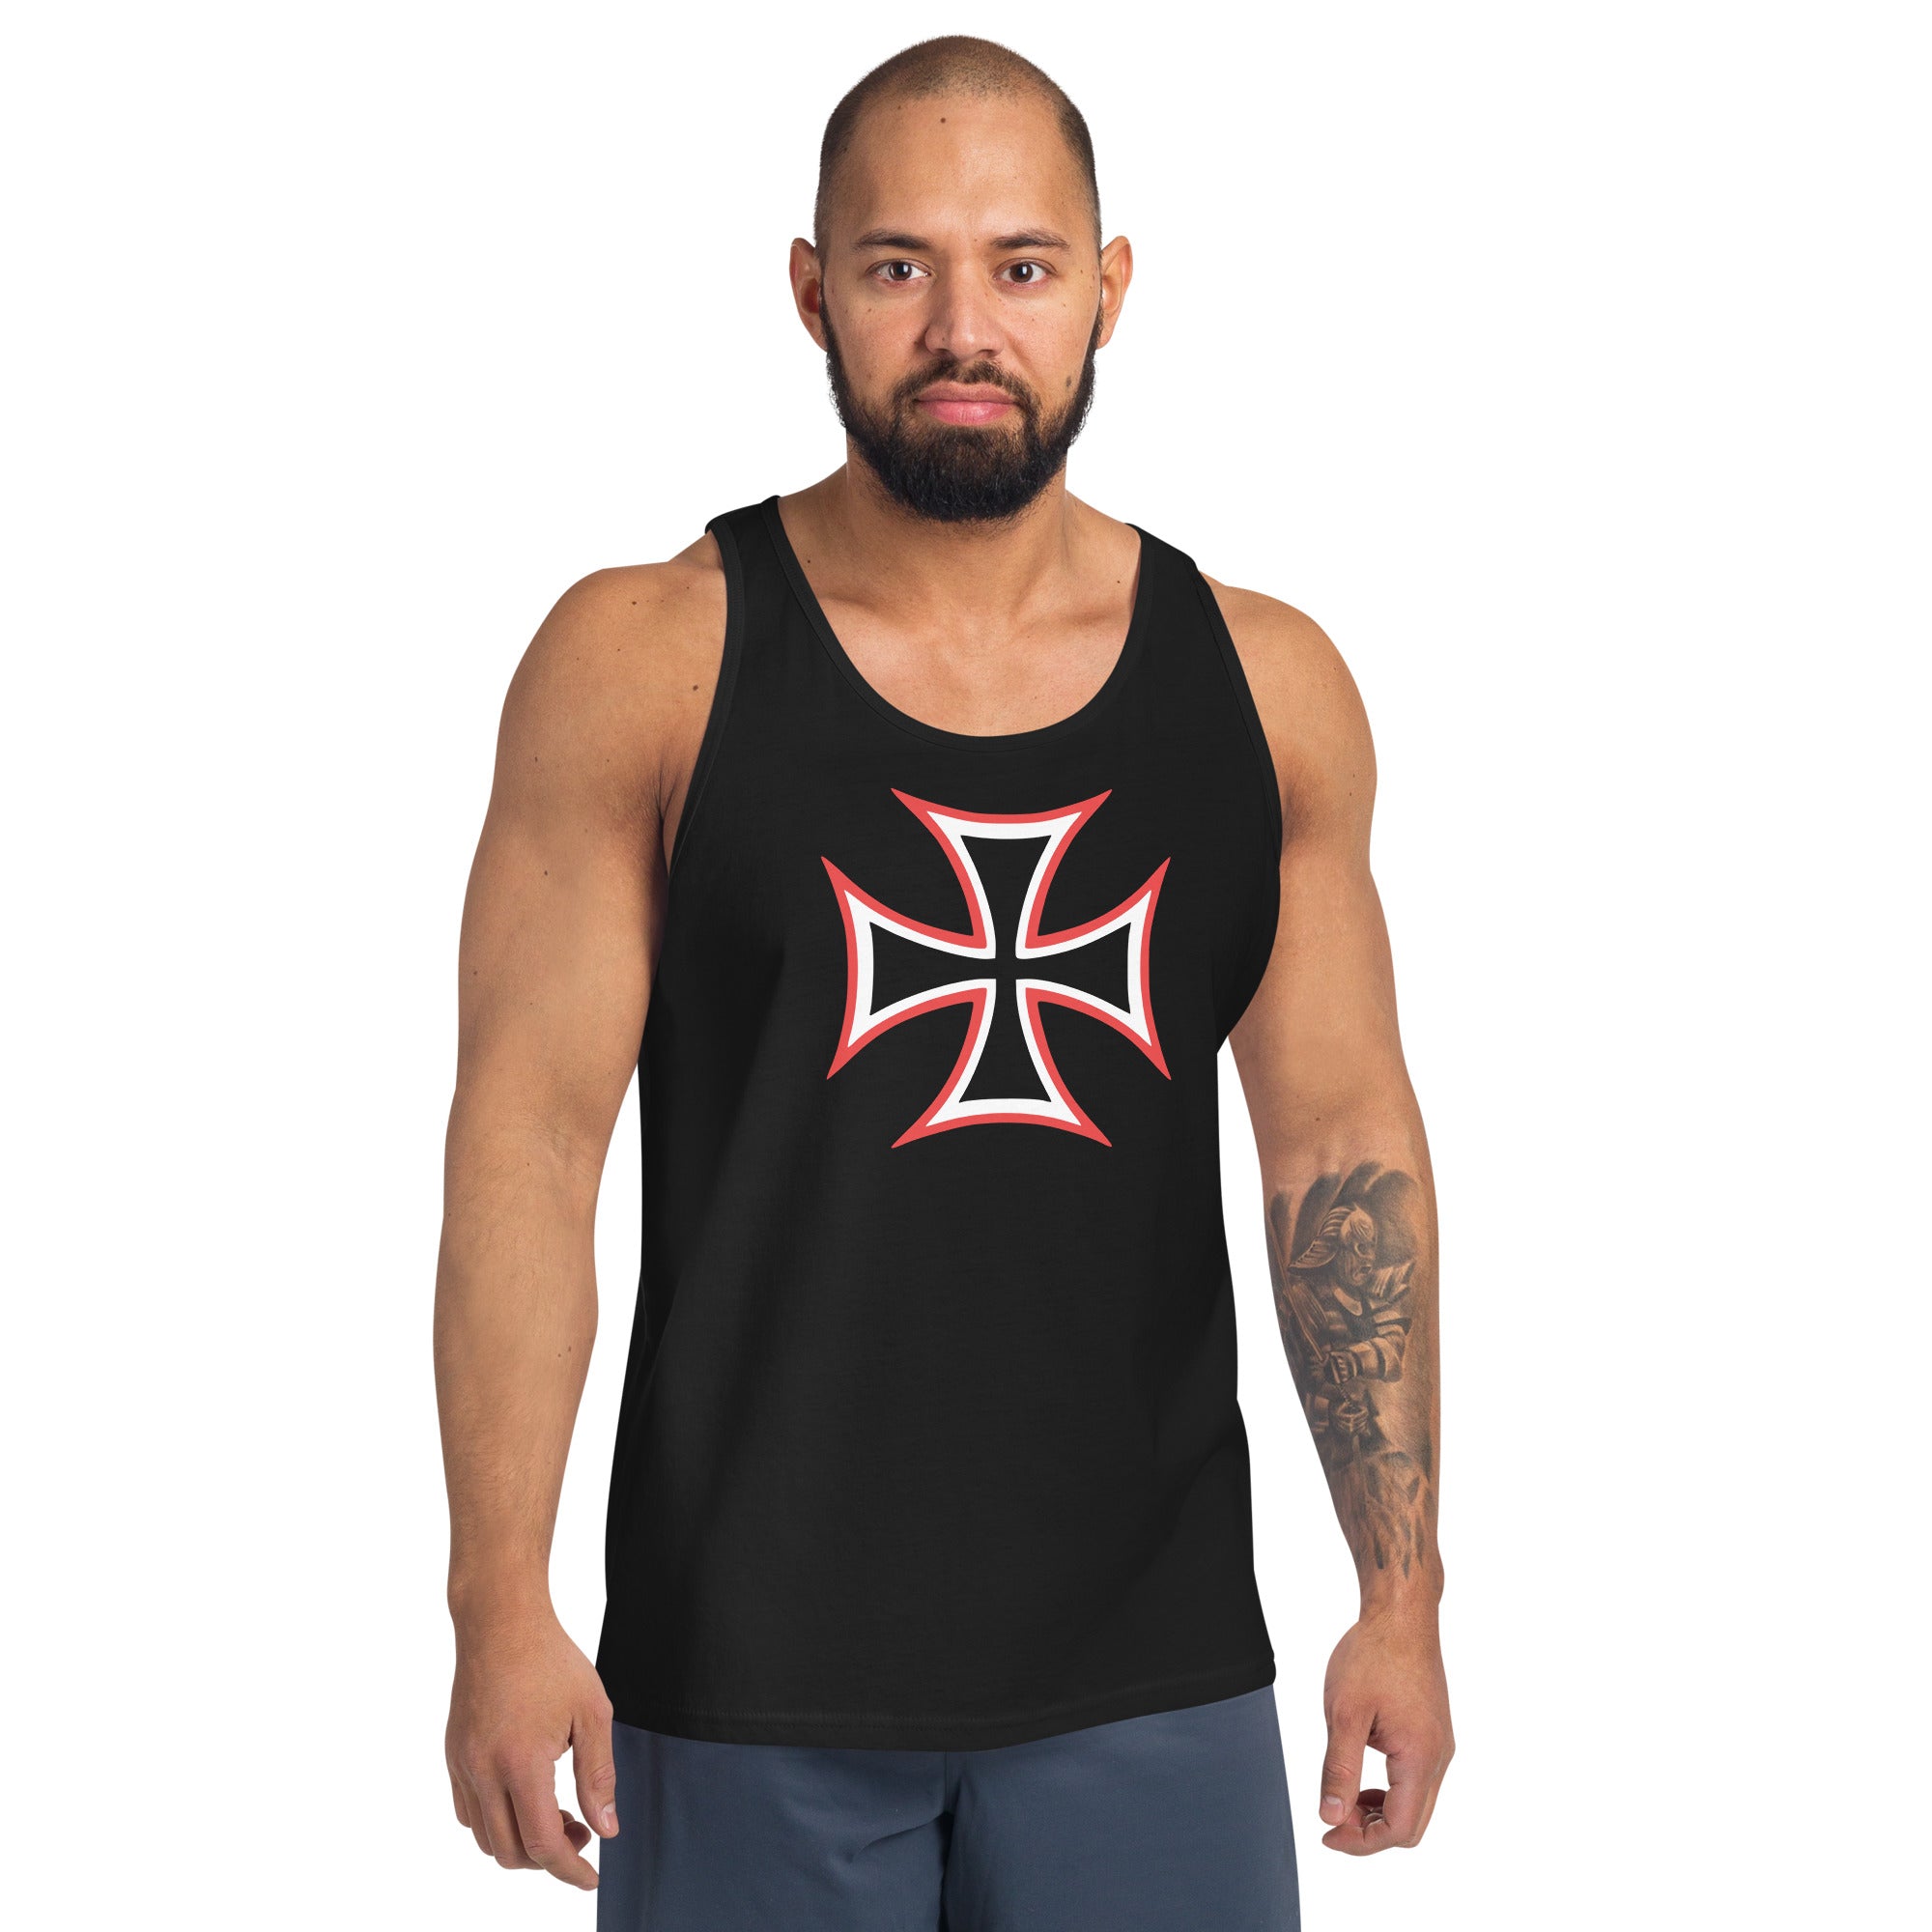 Red and White Occult Biker Cross Symbol Men's Tank Top Shirt